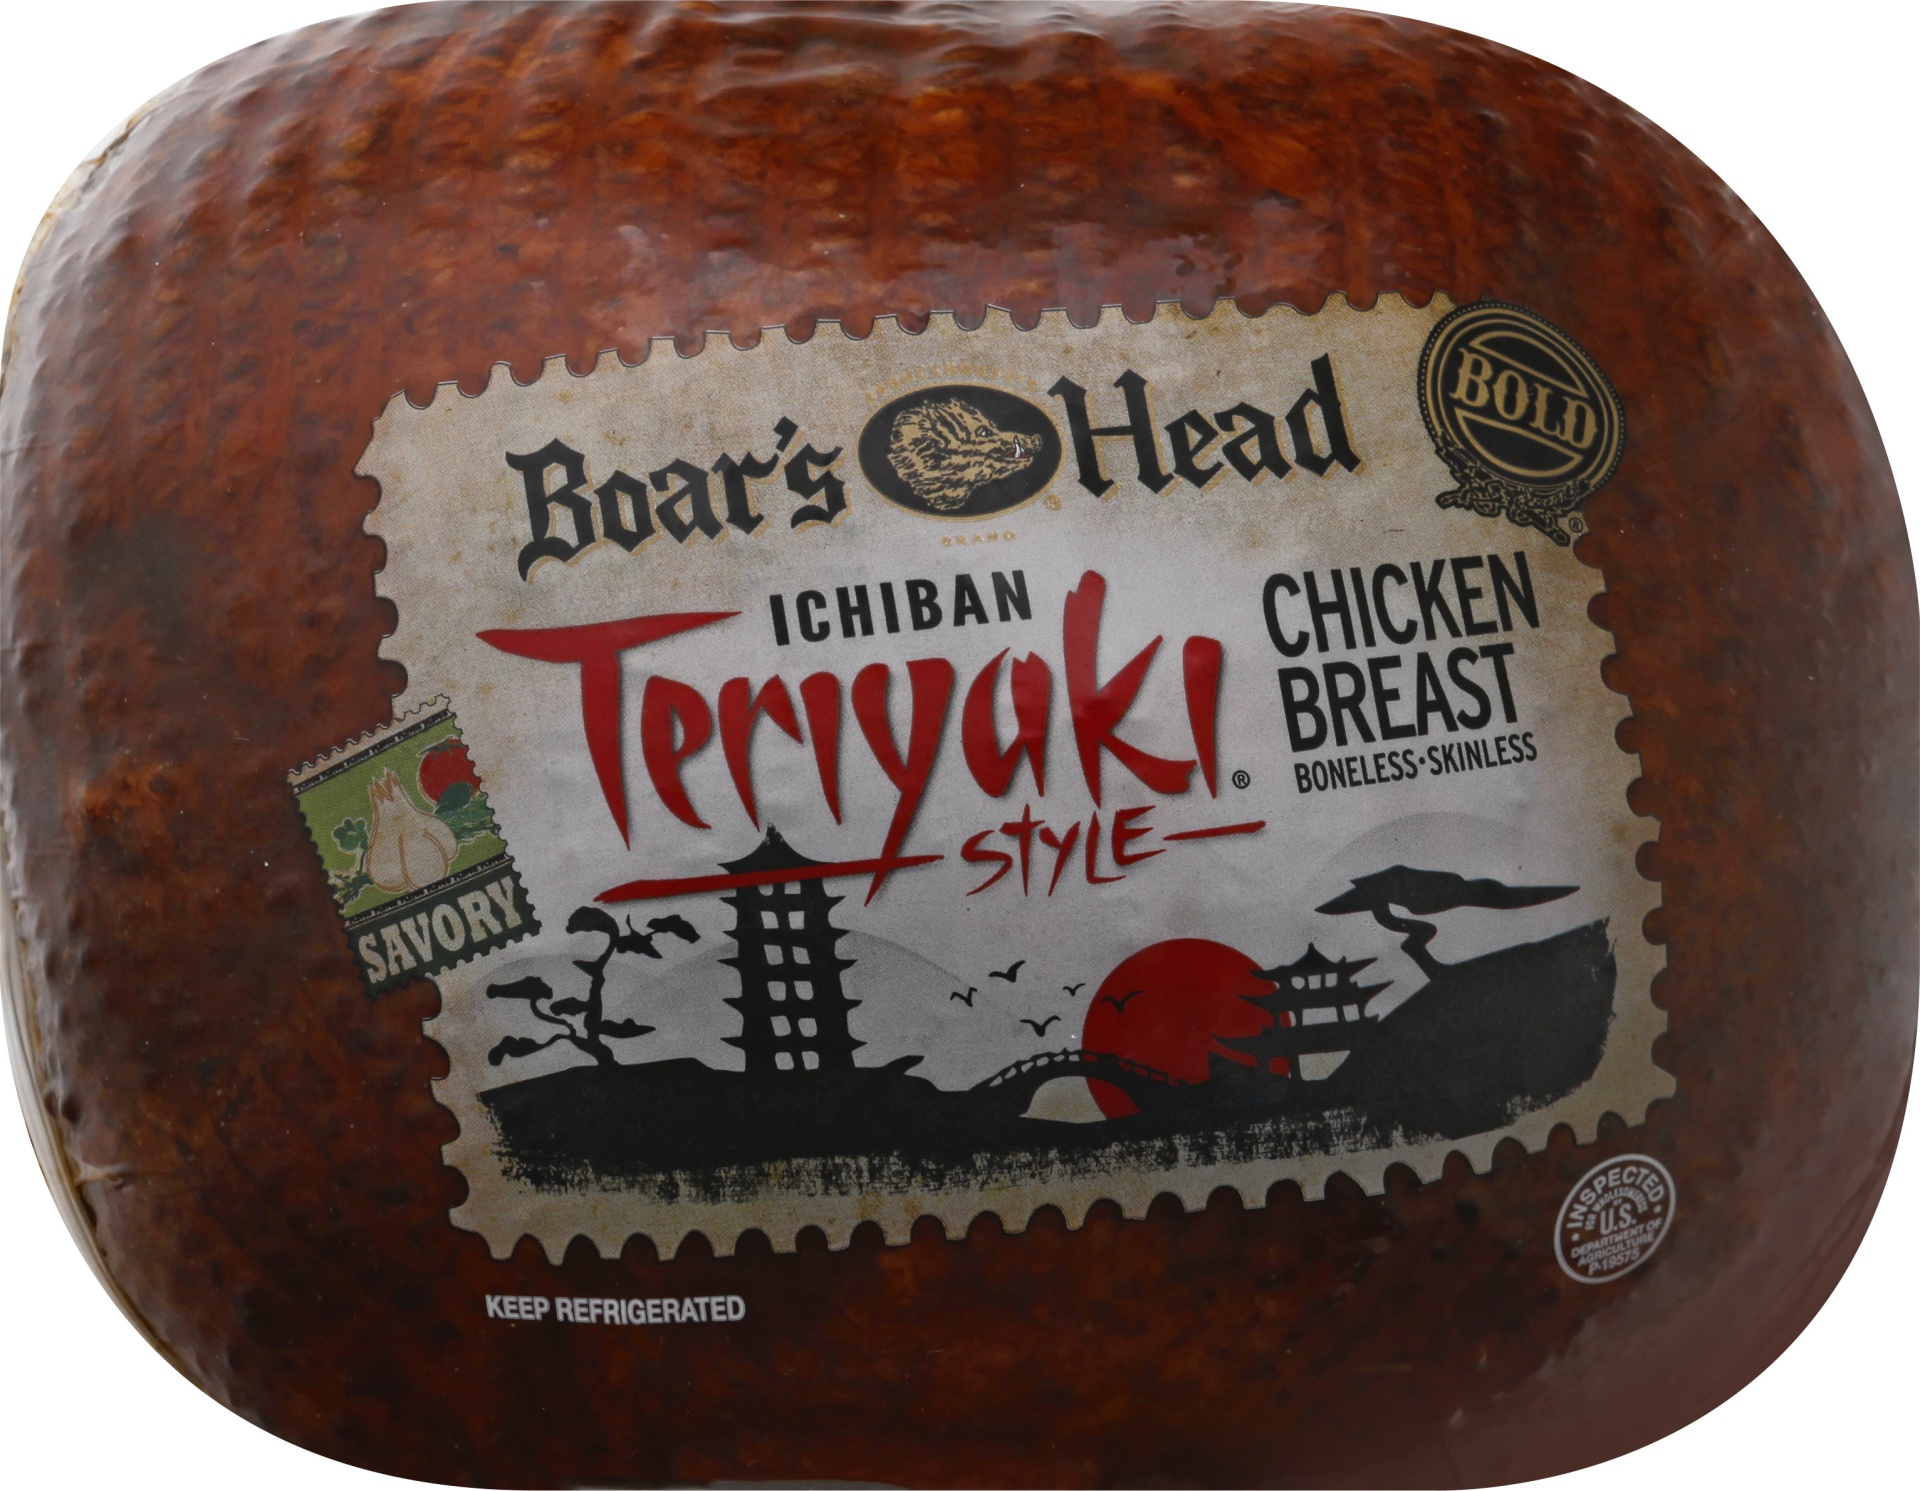 slide 1 of 1, Boar's Head Ichiban Teriyaki Style Oven Roasted Chicken Breast, 1 lb